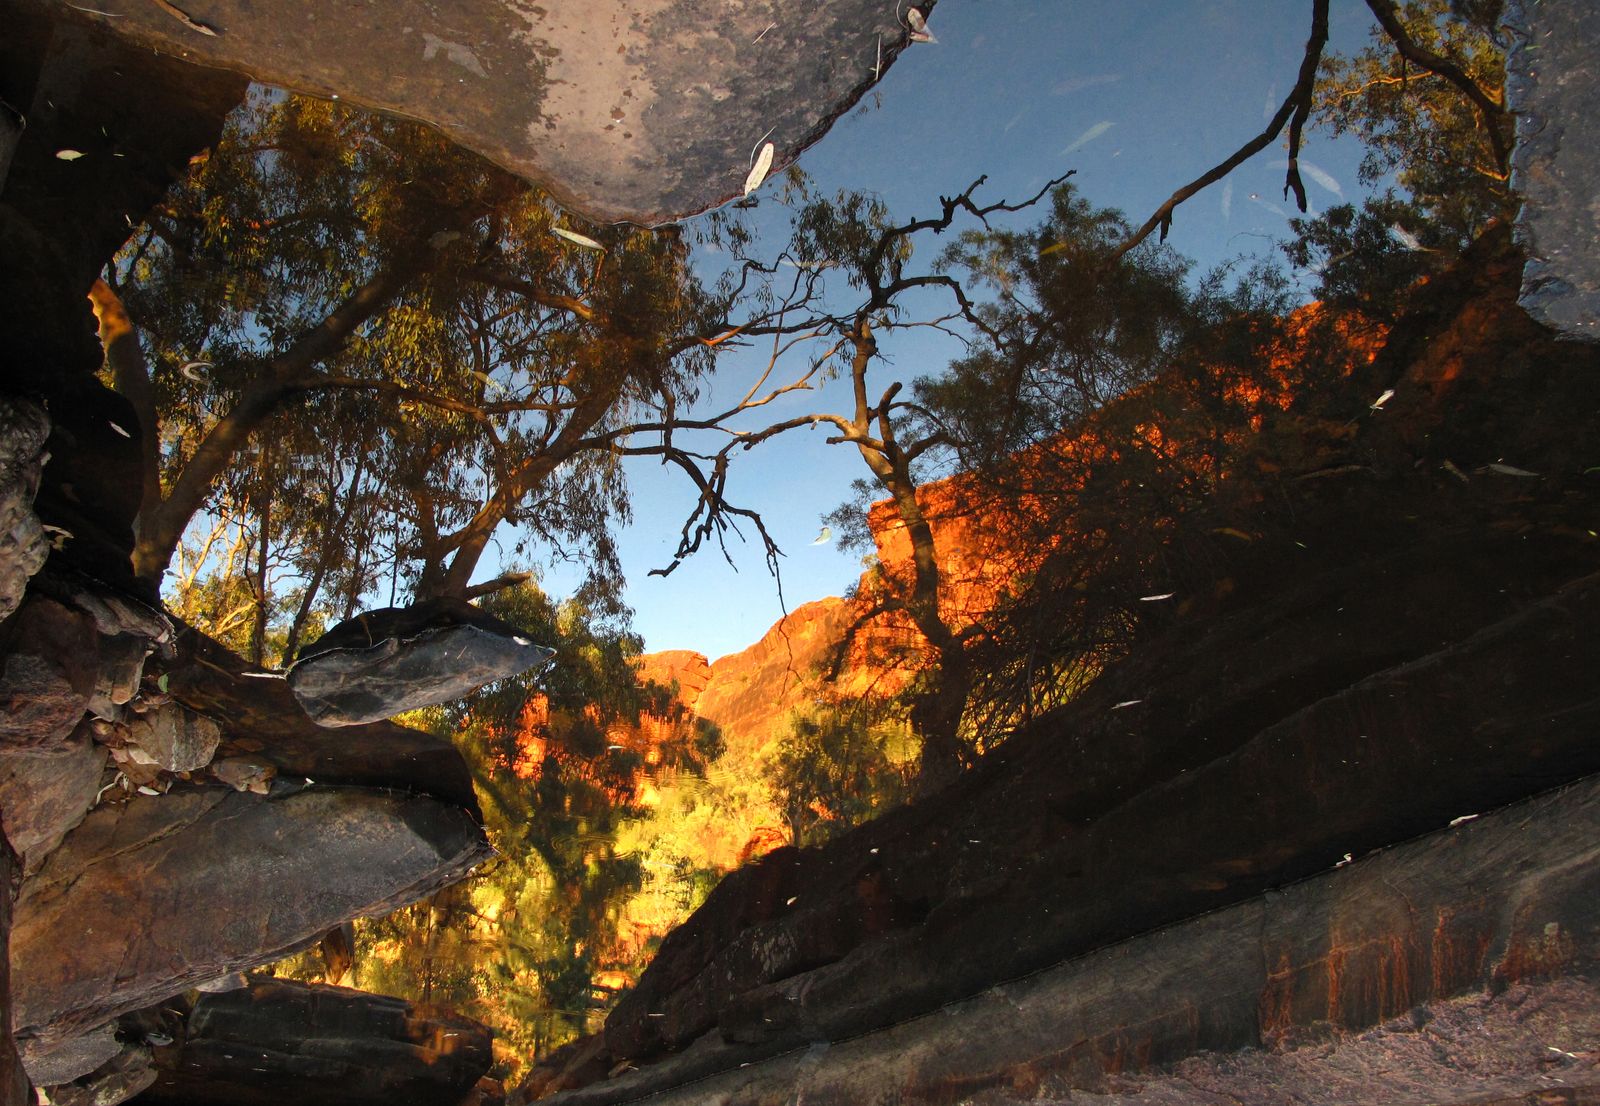 © Cristina Erdmann - "Red Canyon on the floor" Kings Canyon, Northern Territory, Australia 2010